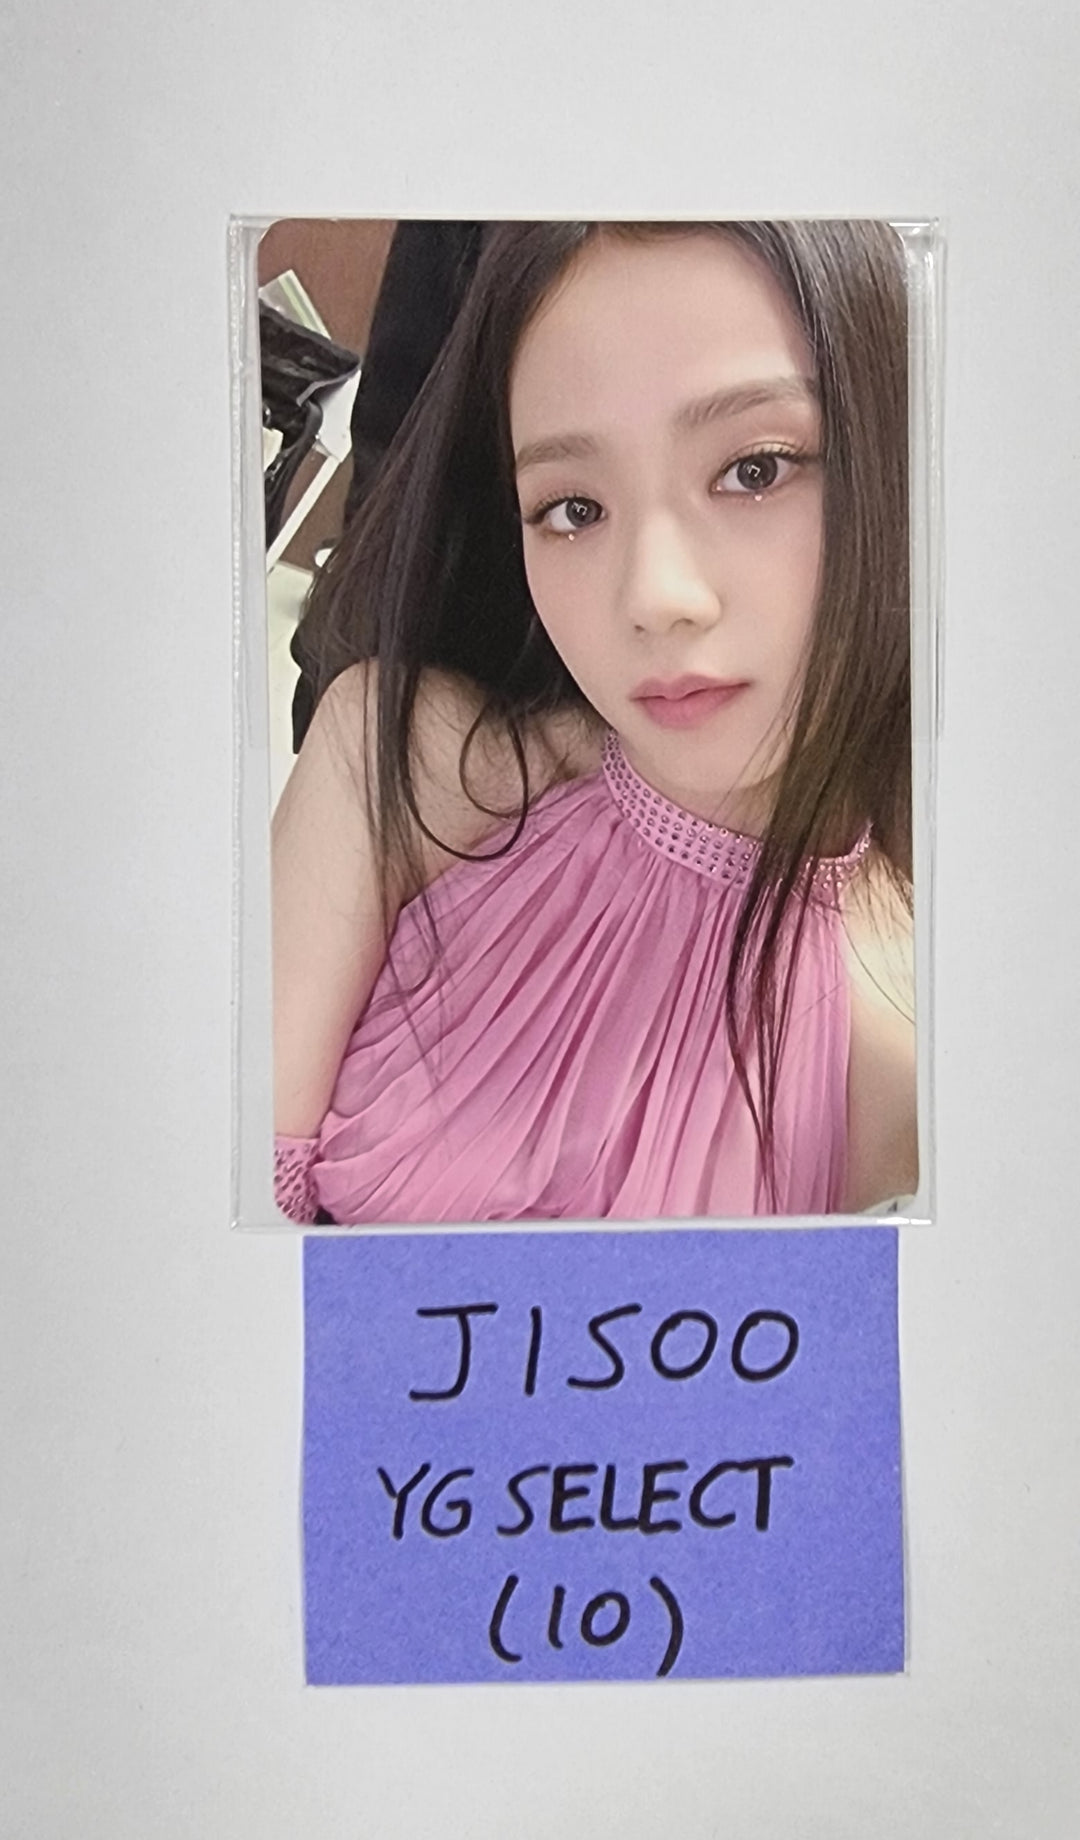 JISOO (Of Black Pink) "ME" - YG Select Pre-Order Benefit Photocard